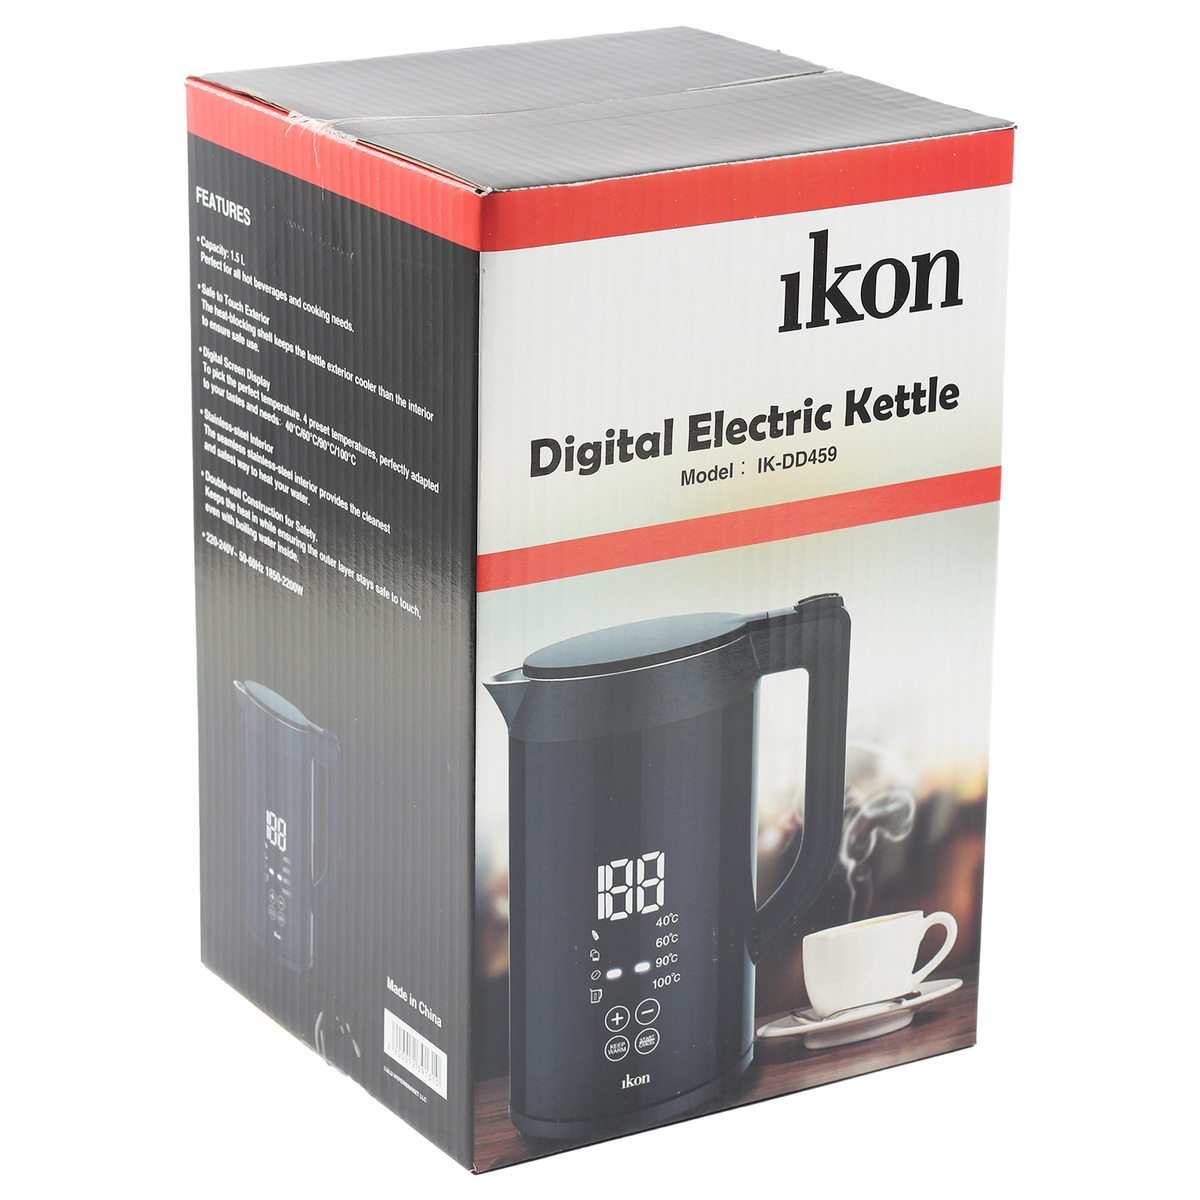 Ikon Digital Kettle, IK-DD459, 1.5 L